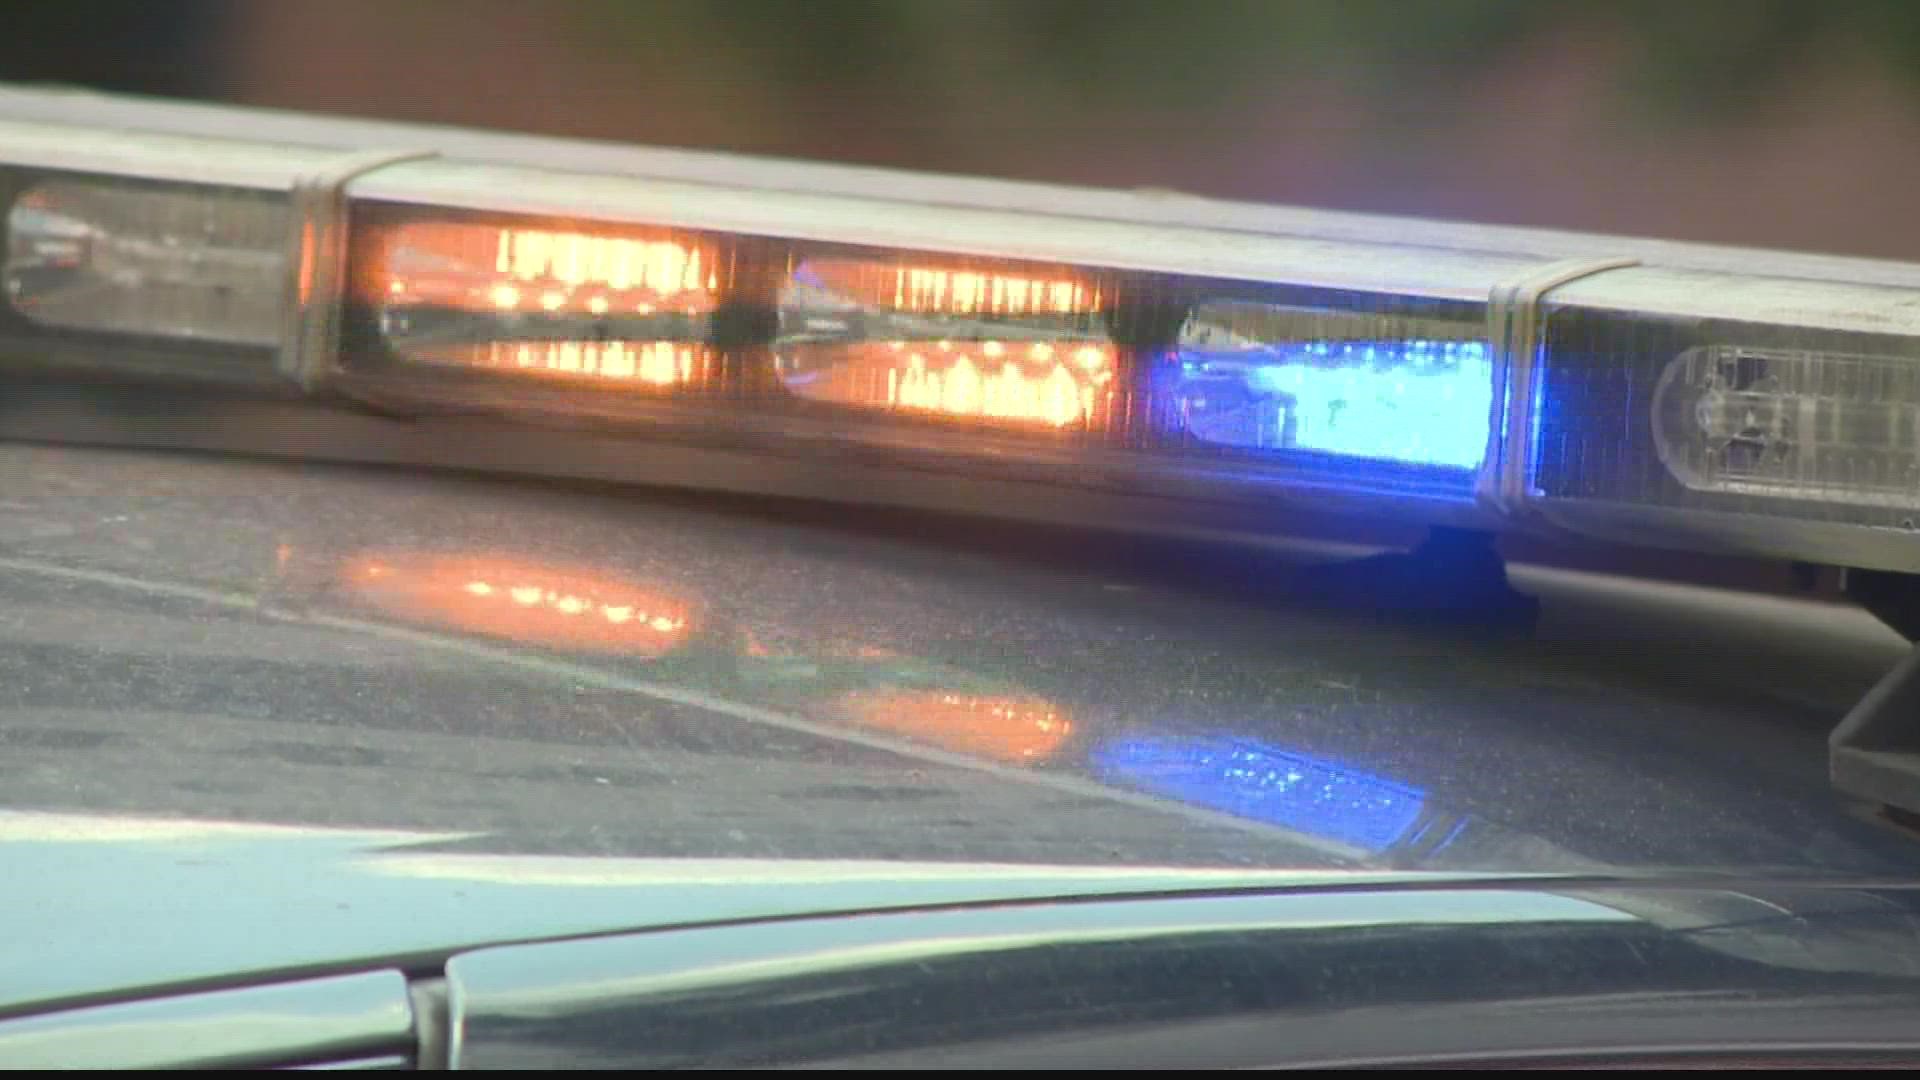 Officers were called to the area near 265 Peachtree St. NE by the Hyatt Regency Atlanta.